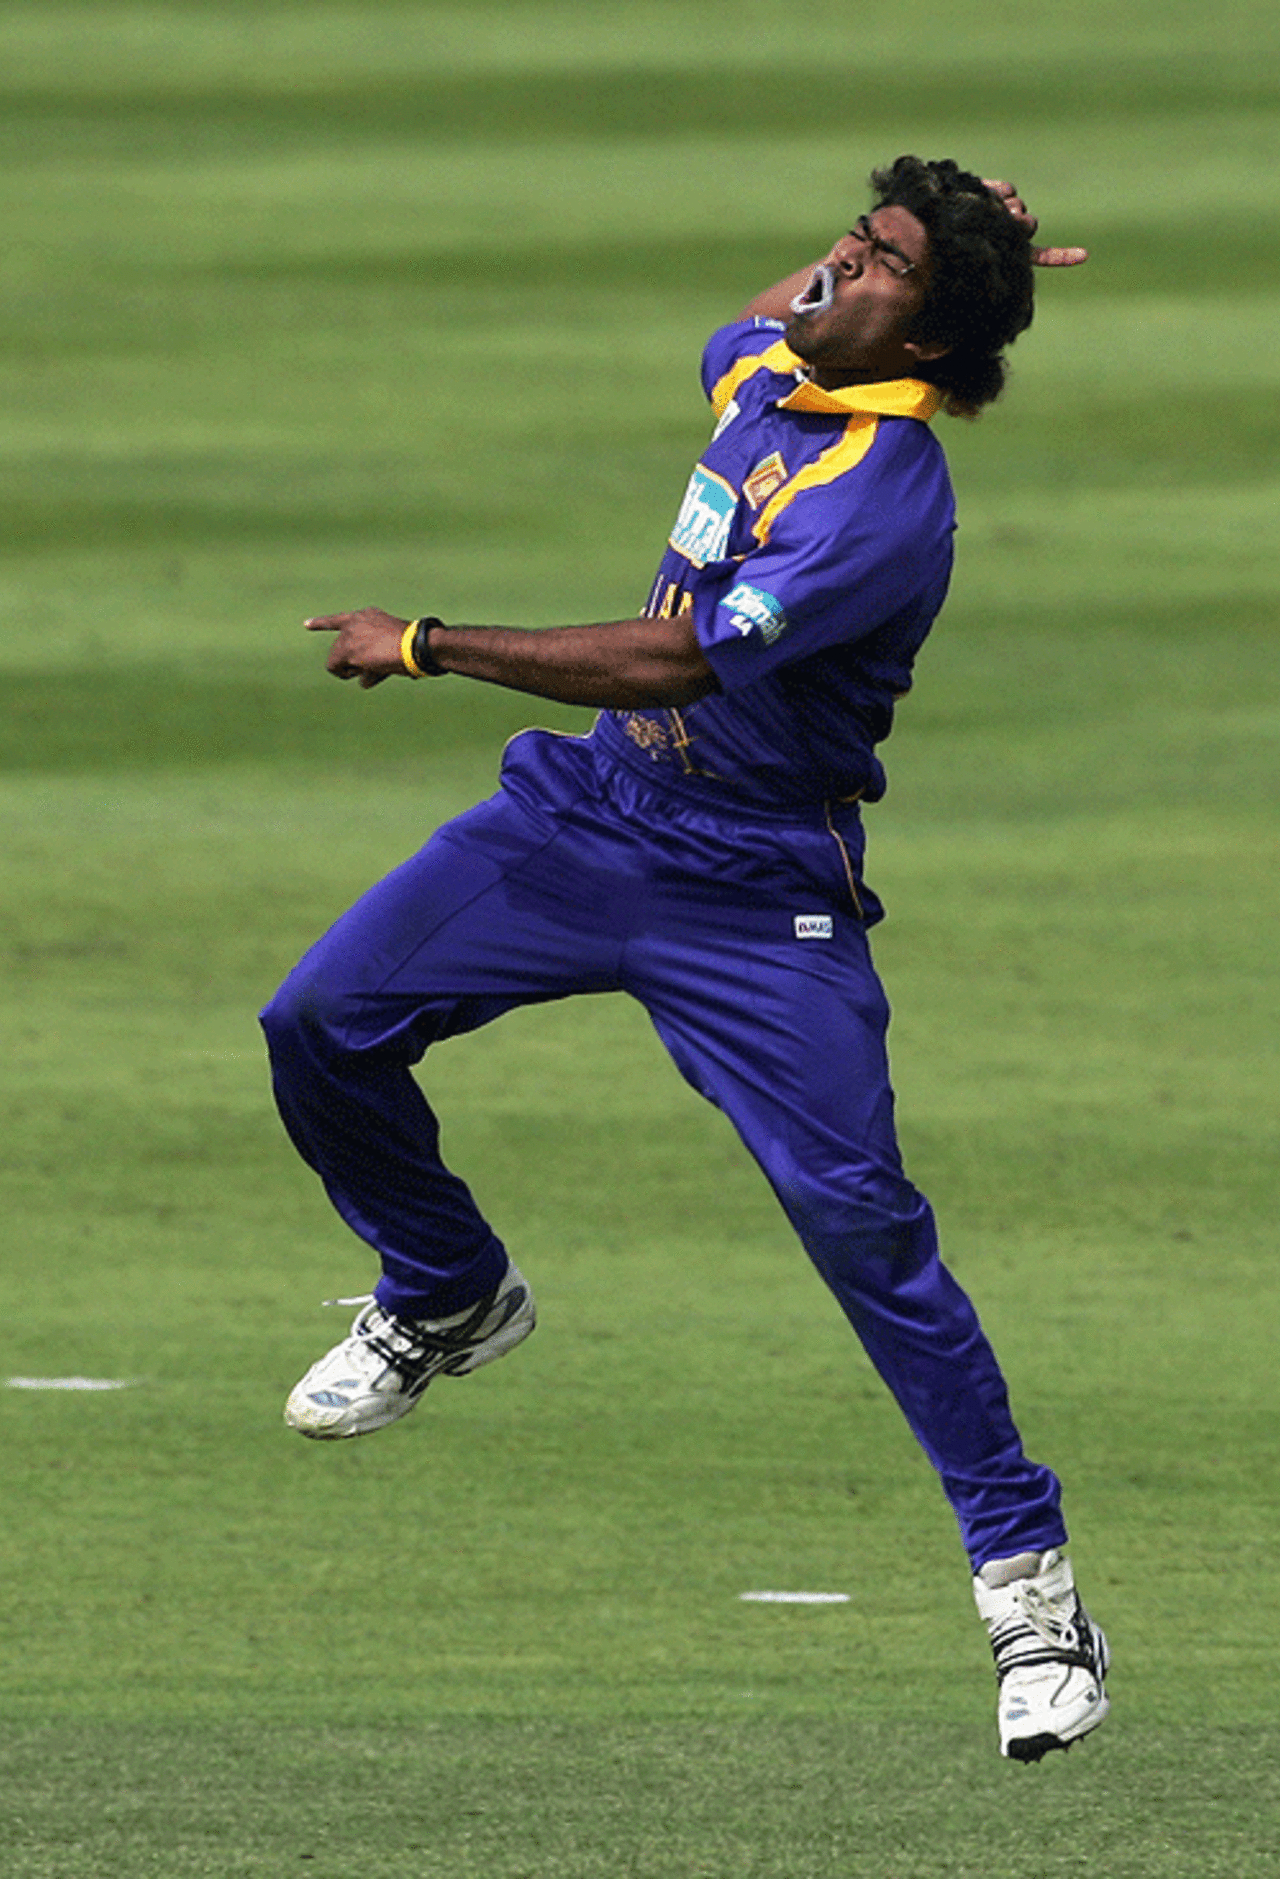 Lasith Malinga shows his emotions after yorking Daniel Vettori, New Zealand v Sri Lanka, 2nd ODI, Queenstown, December 31, 2006